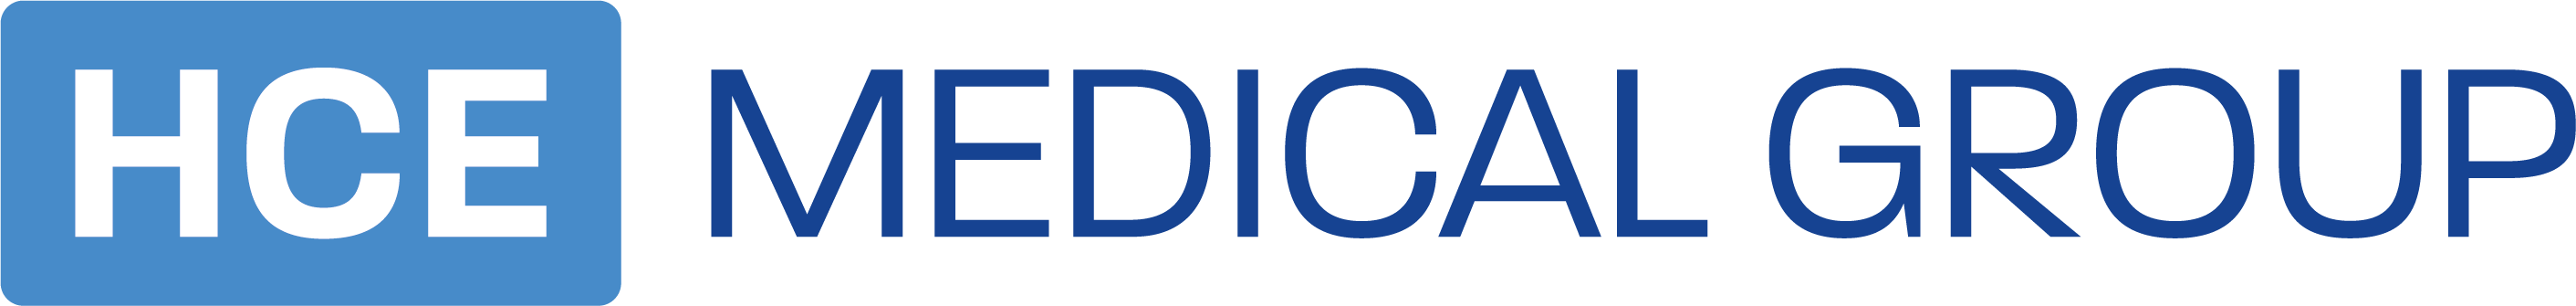 HCE Medical Group Logo